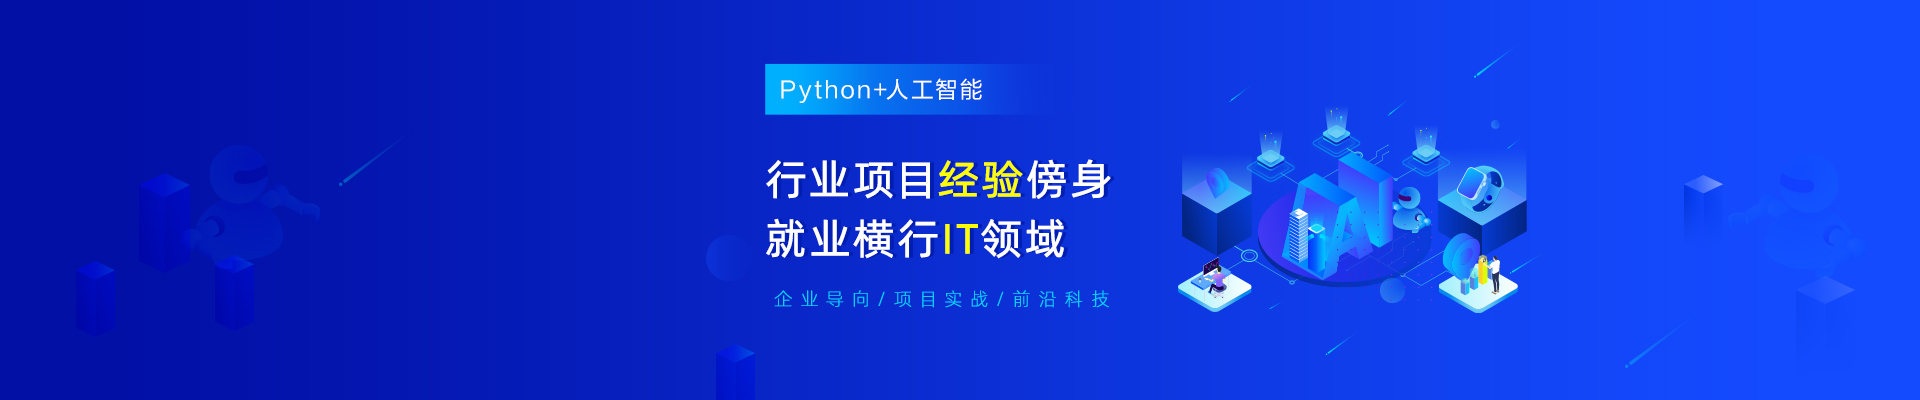 http://www.ujiuye.com/zt/python/?wt.bd=ZZ1640